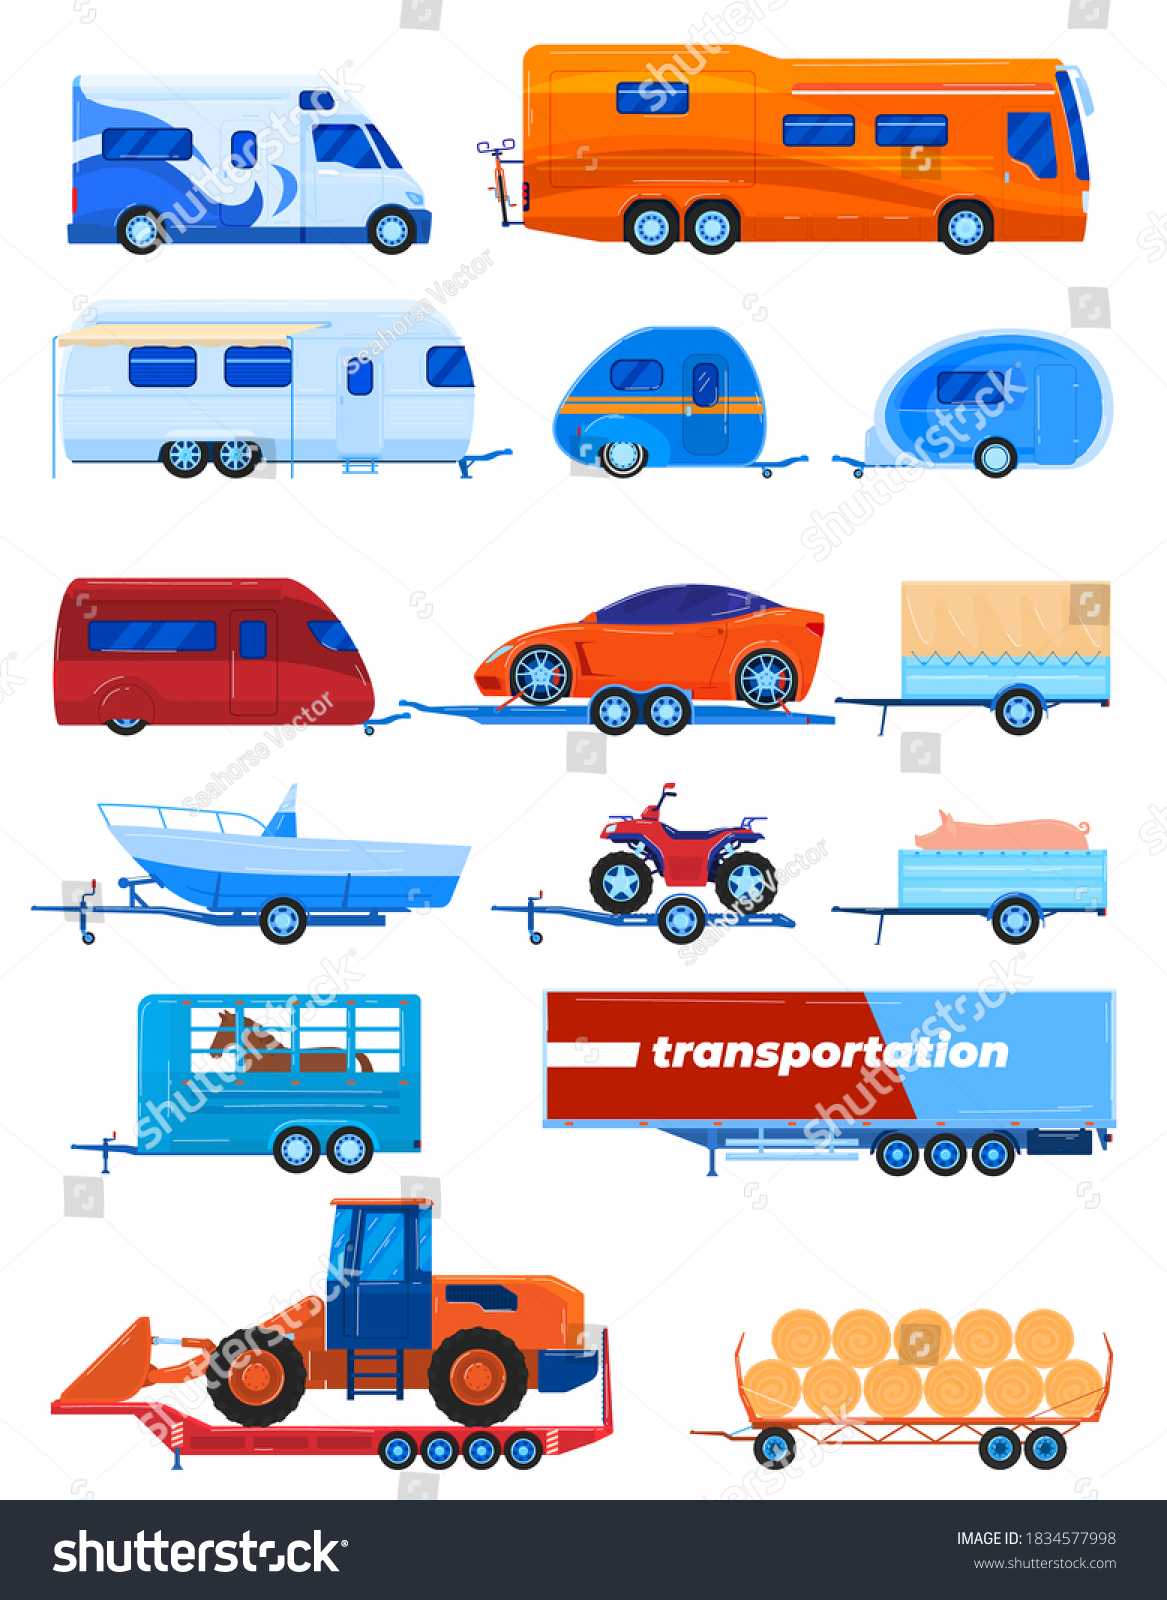 SVG of Camper trailer transport vector illustration set. Cartoon flat car bus caravan campervan collection for people tourist passengers transportation, truck vehicle for cargo transporting isolated on white svg